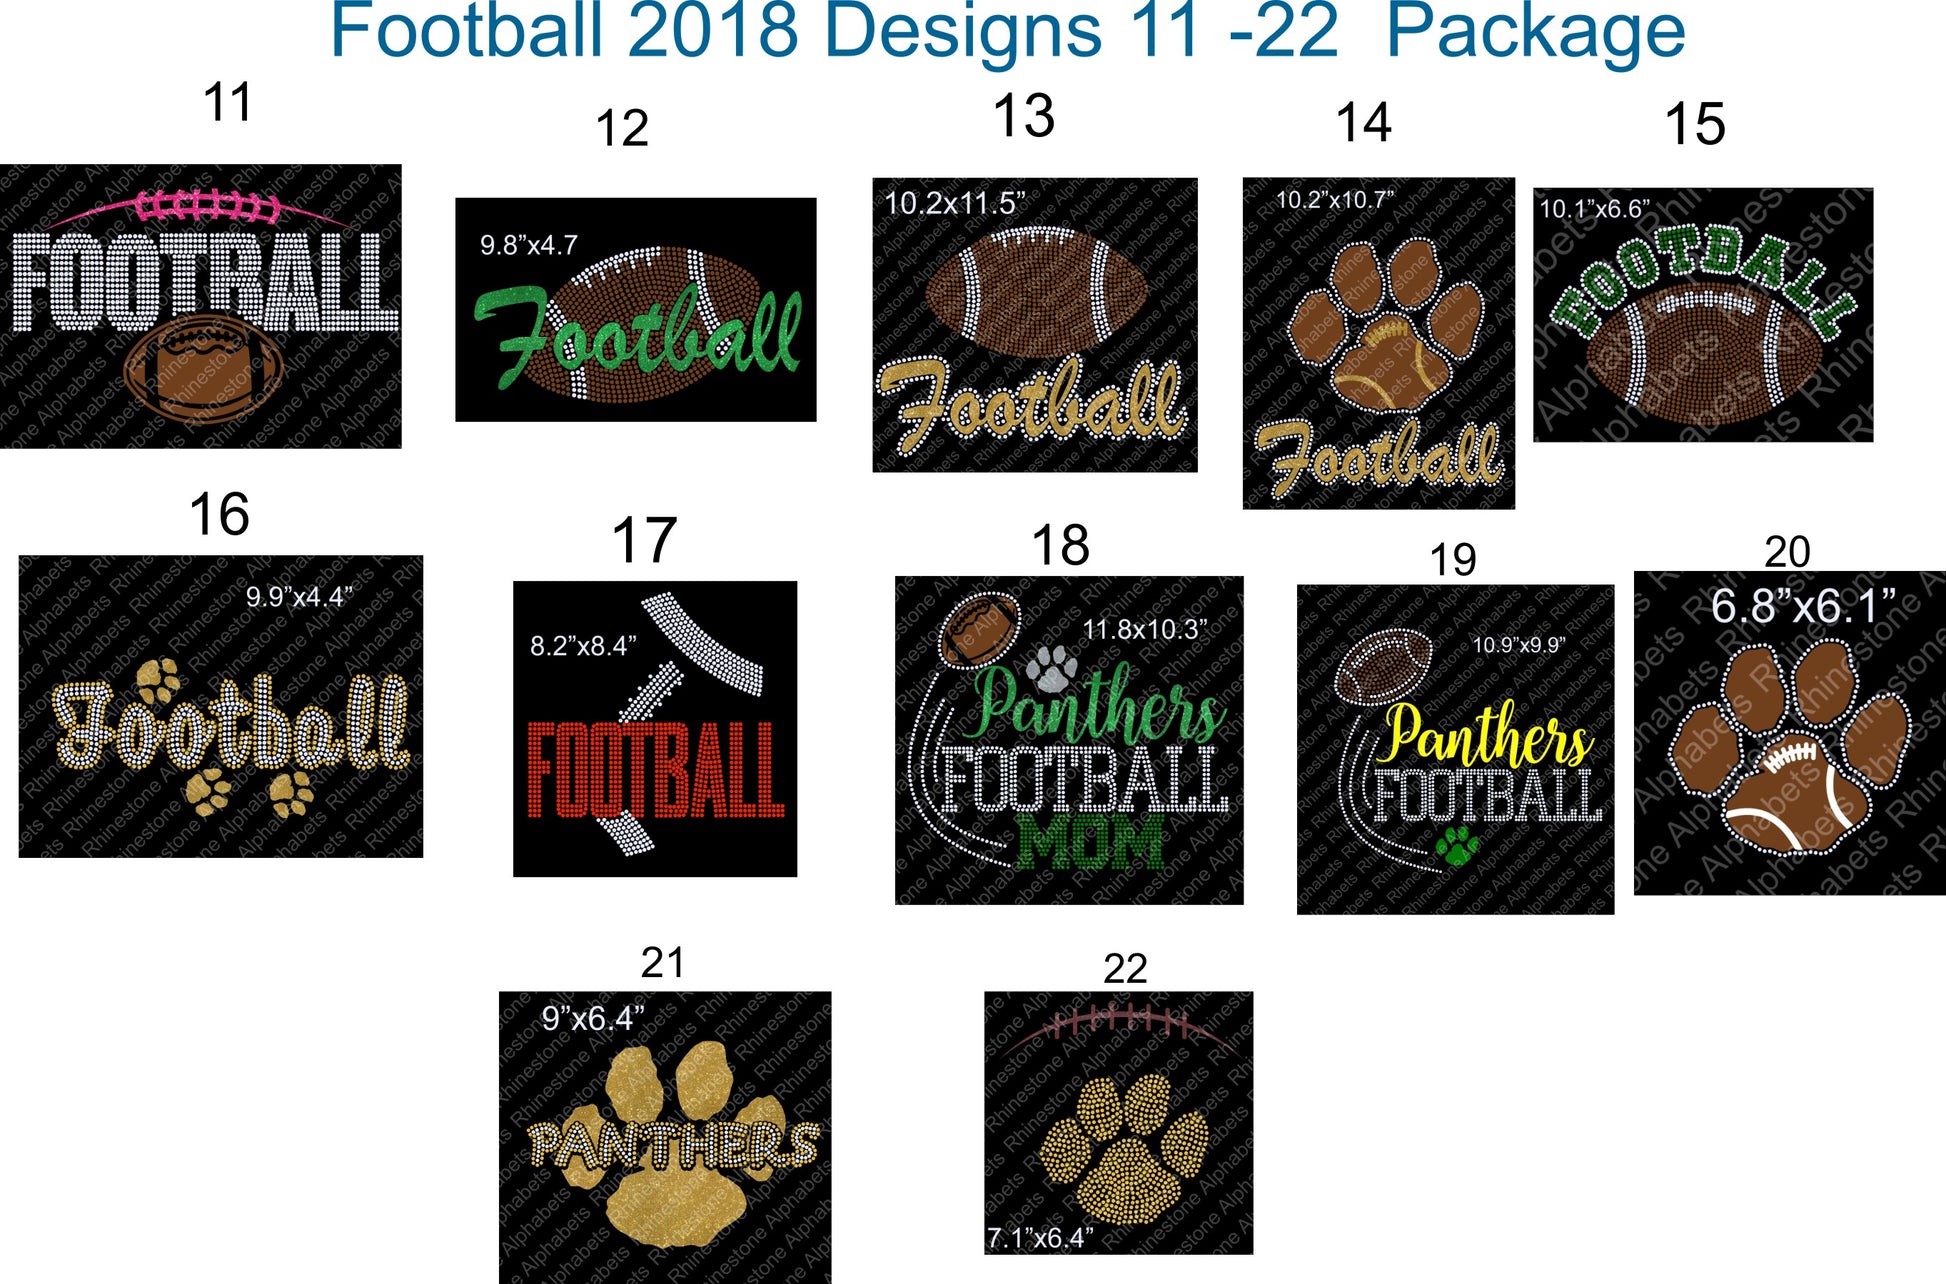 Football Pack Designs 11-22 2018 - RhinestoneAlphabets